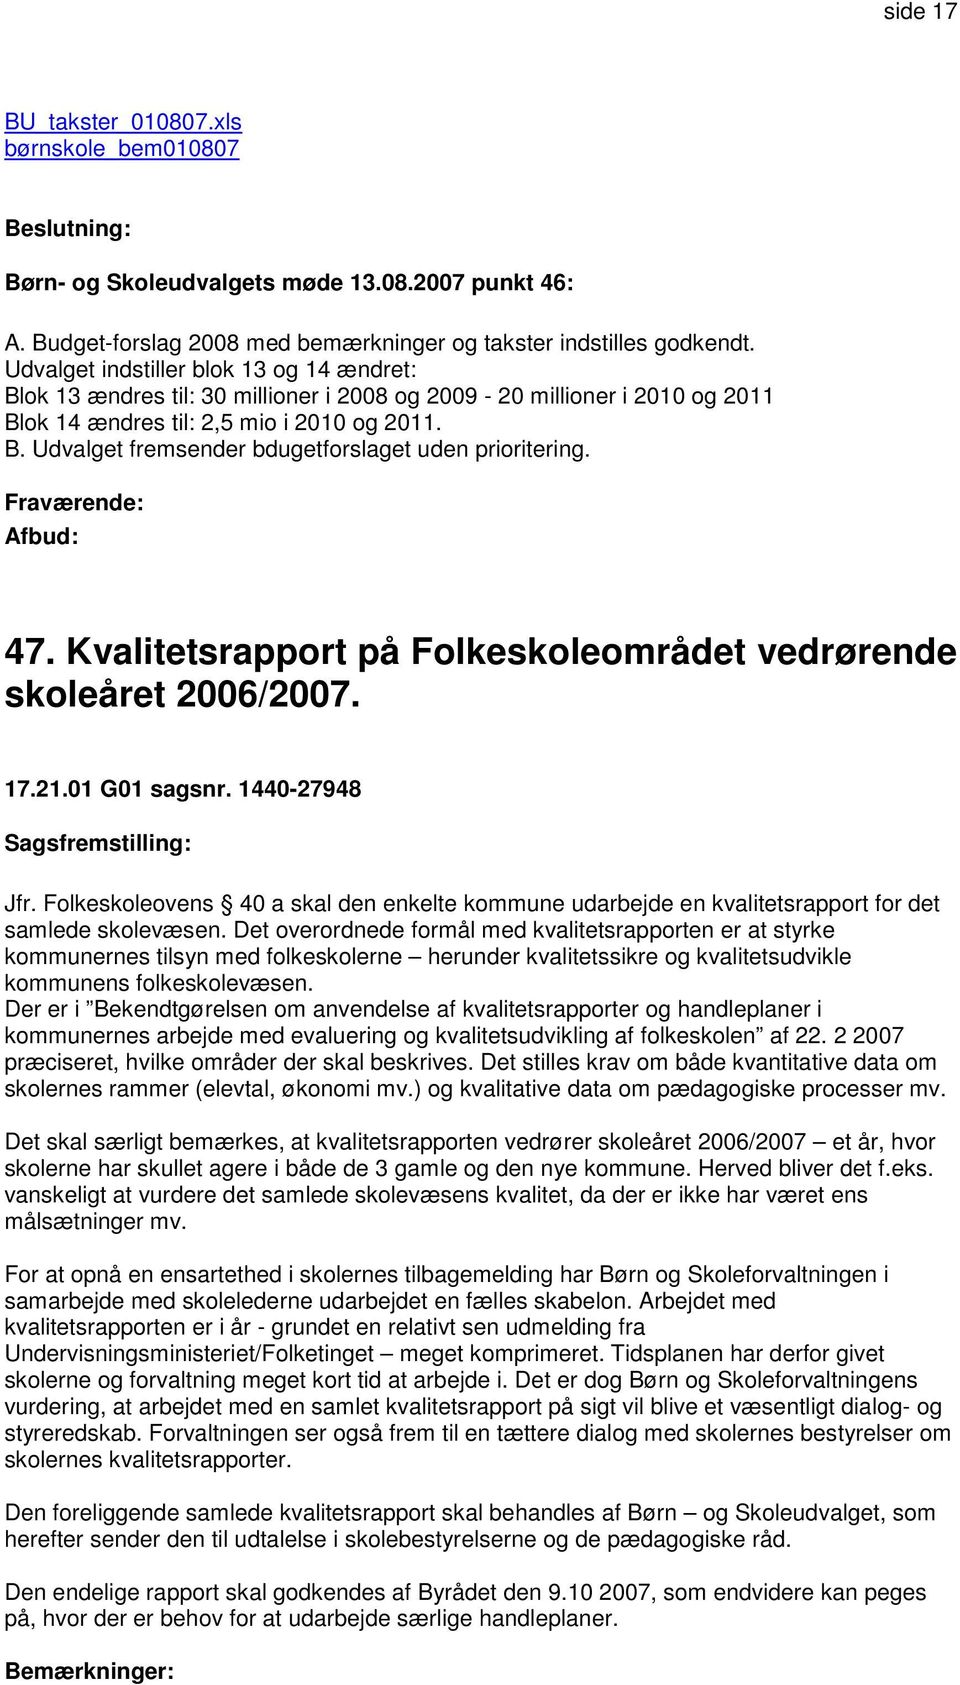 47. Kvalitetsrapport på Folkeskoleområdet vedrørende skoleåret 2006/2007. 17.21.01 G01 sagsnr. 1440-27948 Jfr.